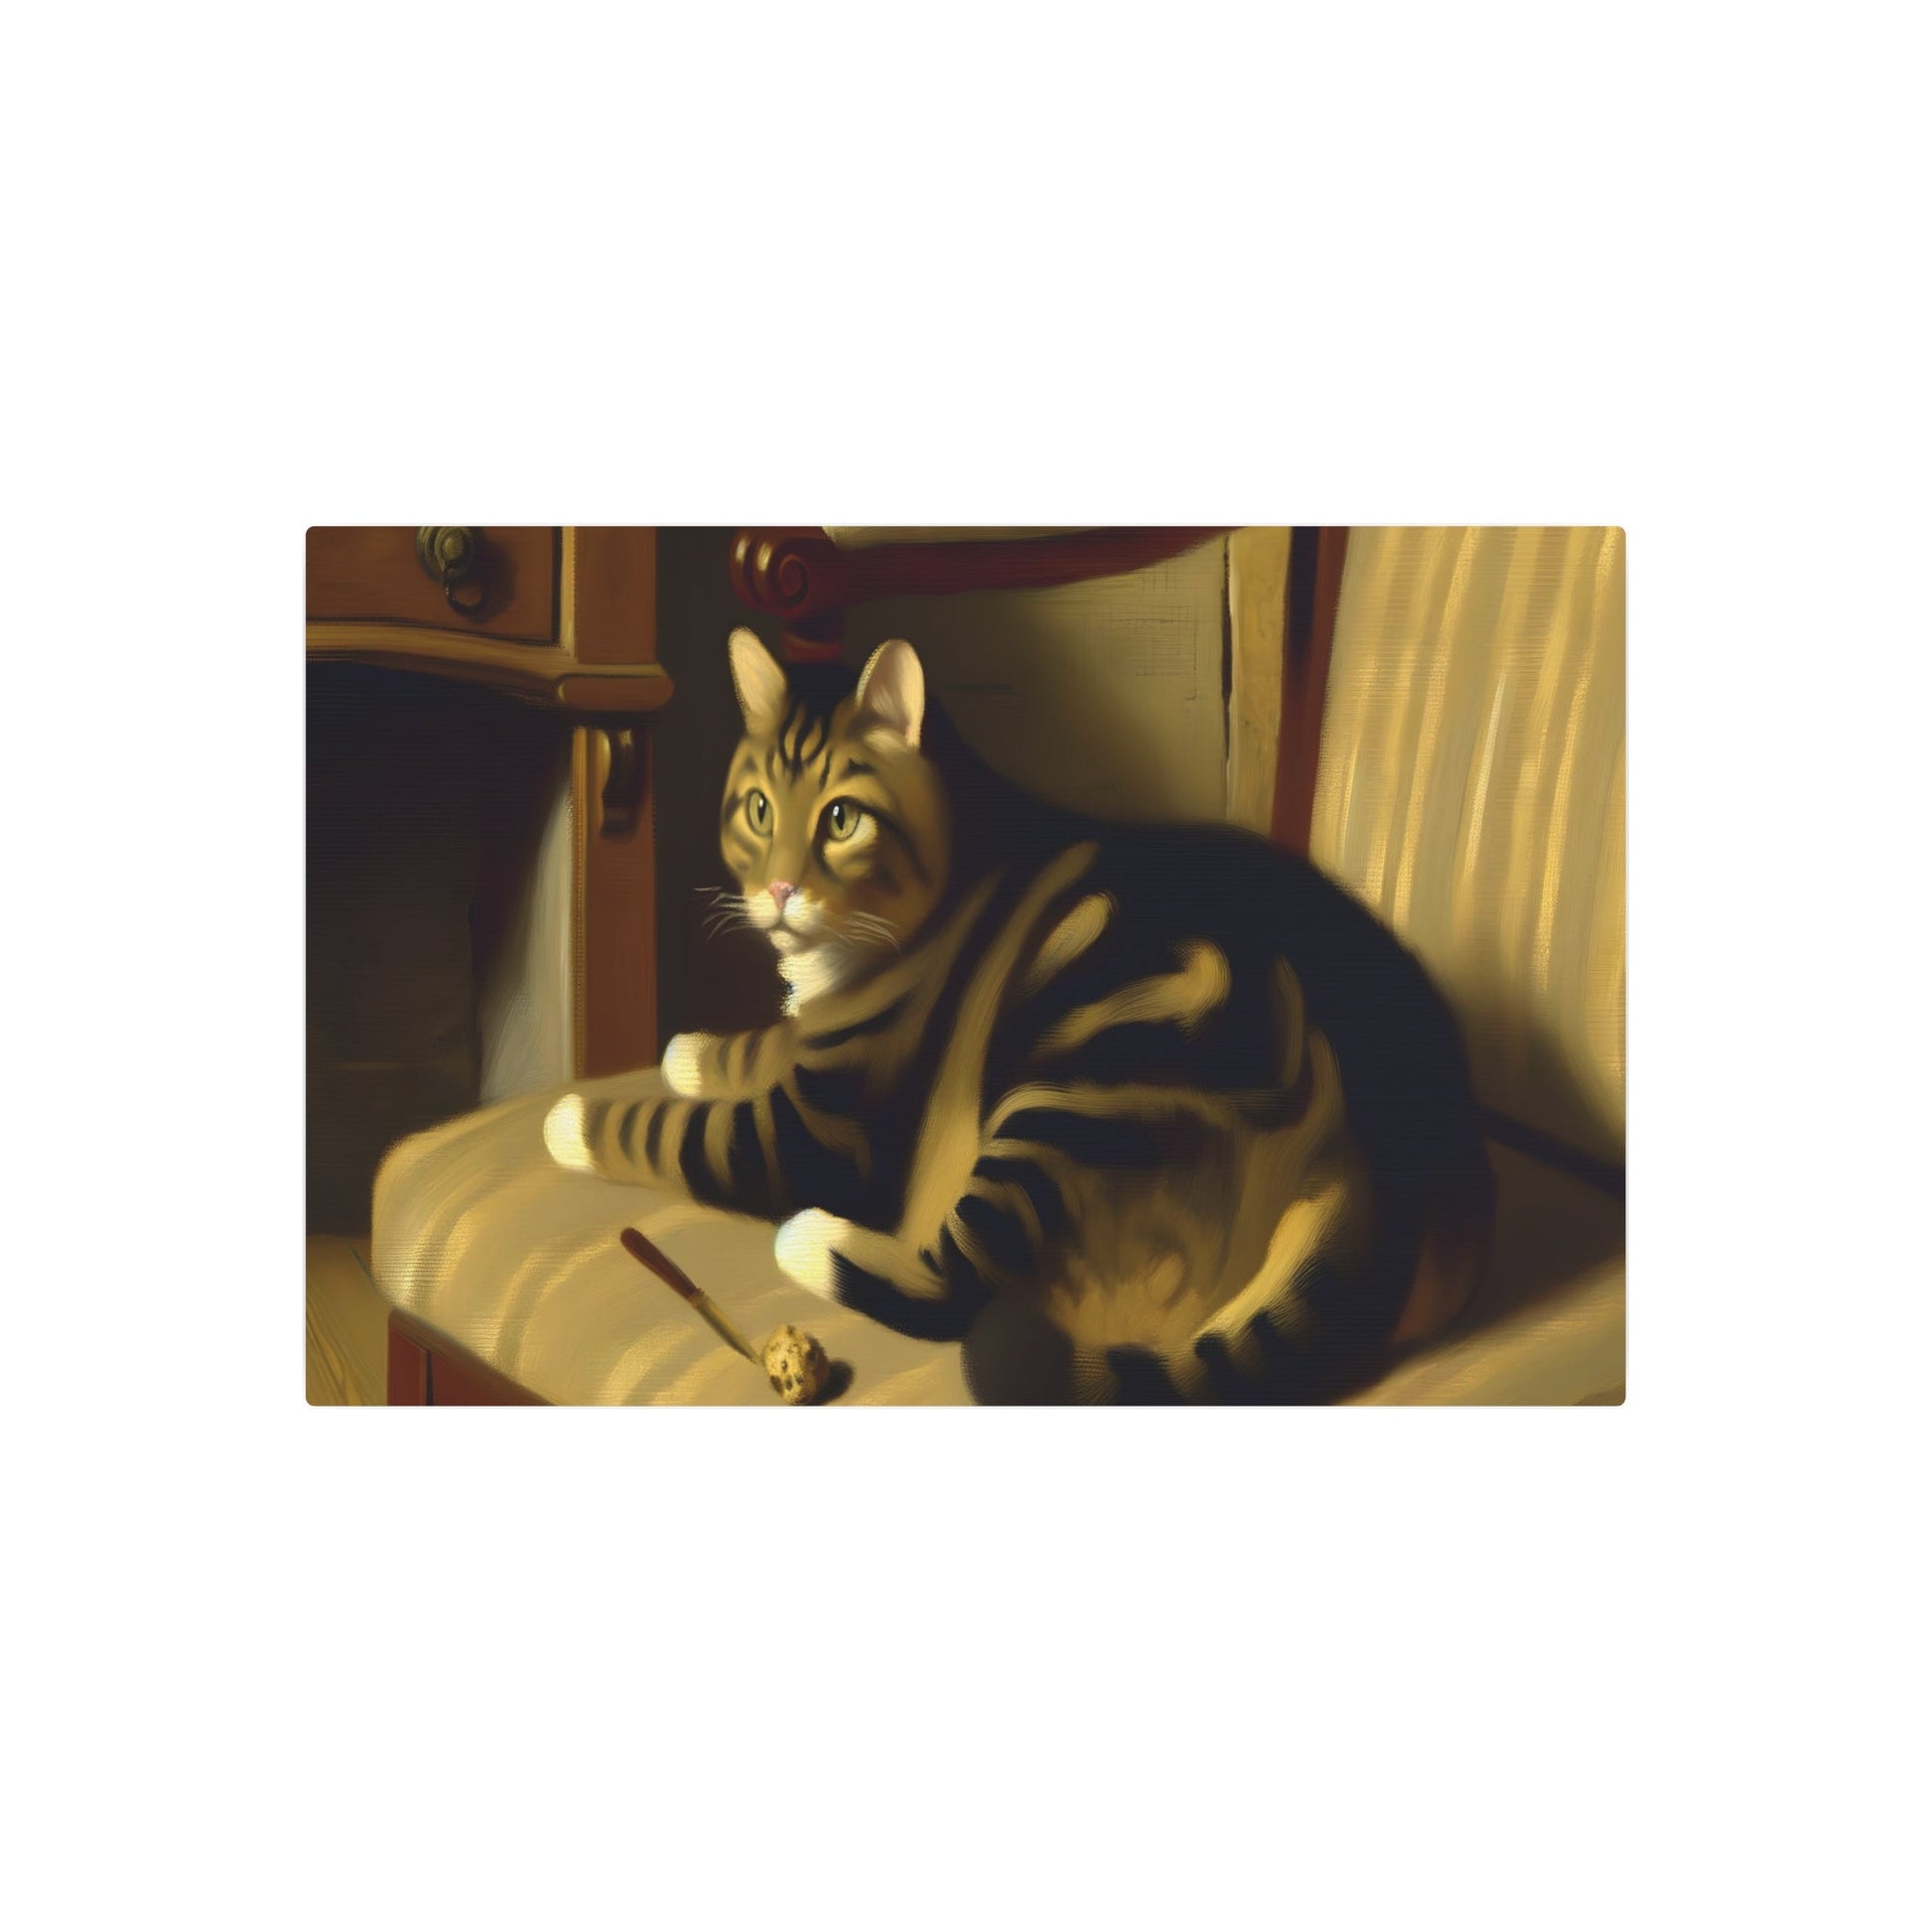 Metal Poster Art | "Realistic Realism Art Style: Detailed Domestic Cat Portrait in Western Art Styles" - Metal Poster Art 36″ x 24″ (Horizontal) 0.12''